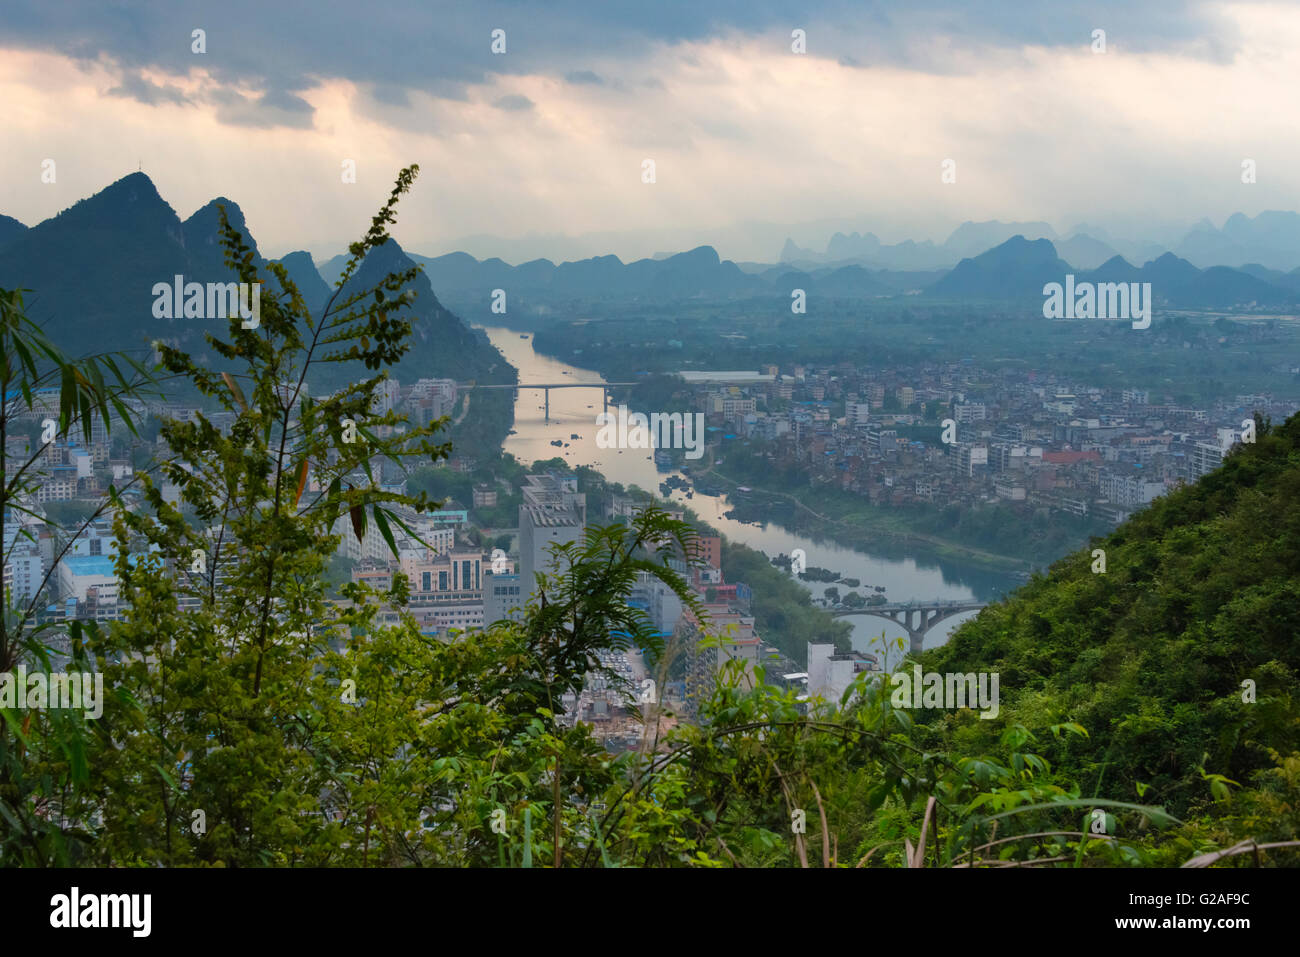 Cityscape of Yizhou with karst hills, Guangxi Province, China Stock Photo